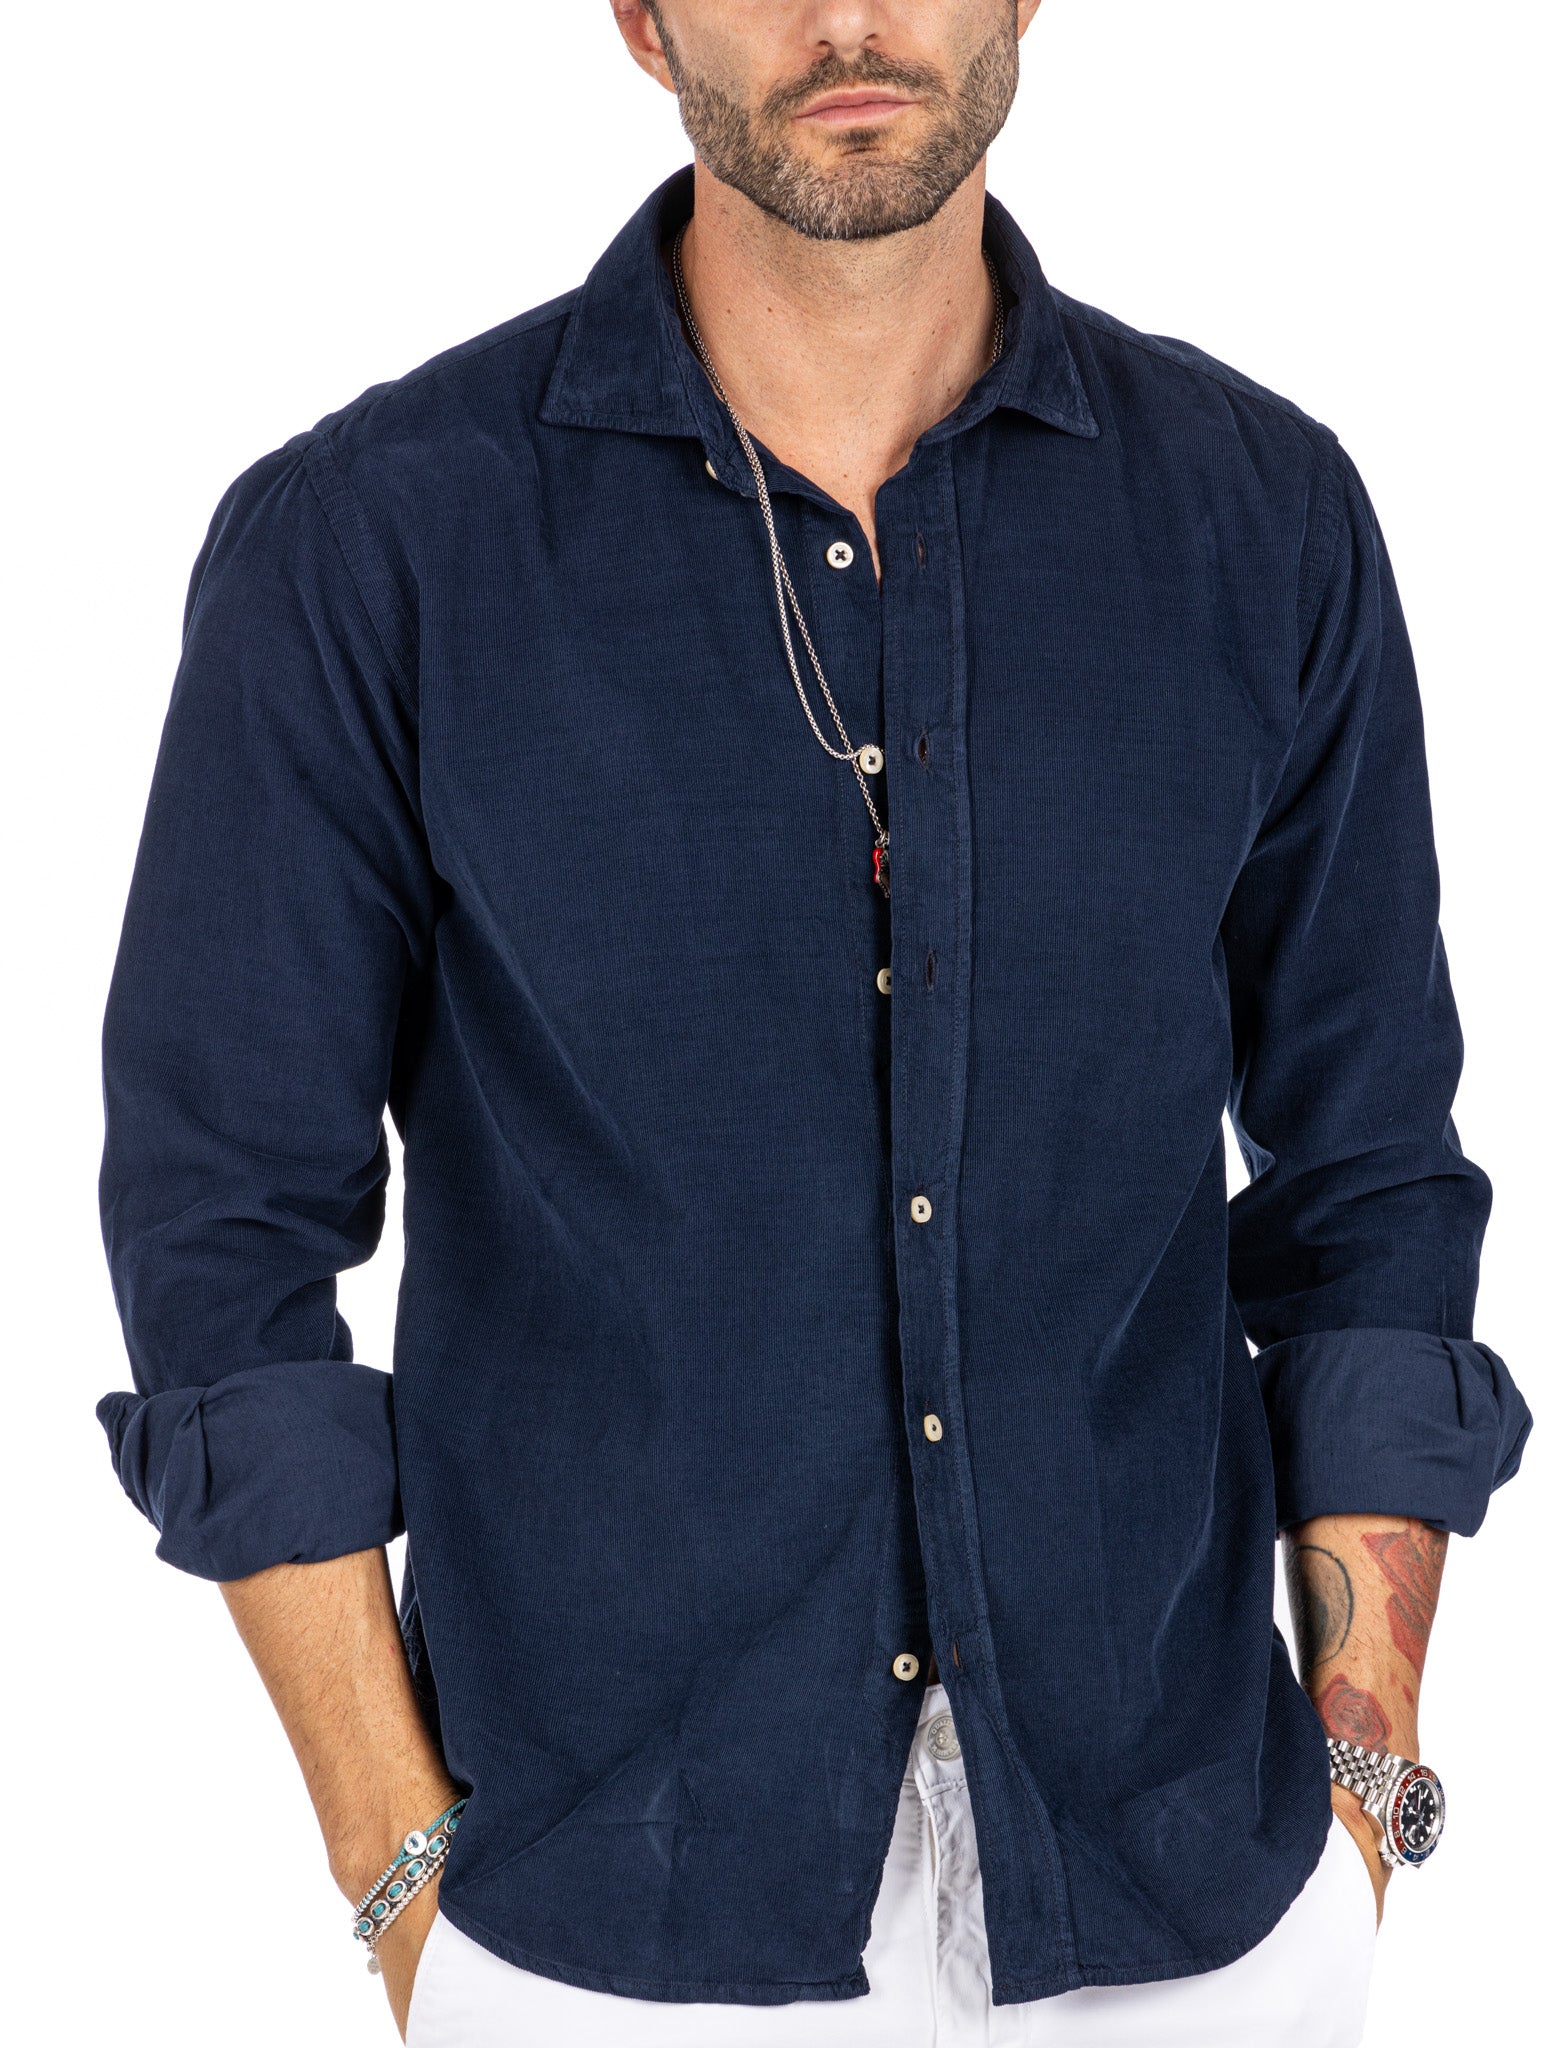 Vega - chemise en velours rayé bleu